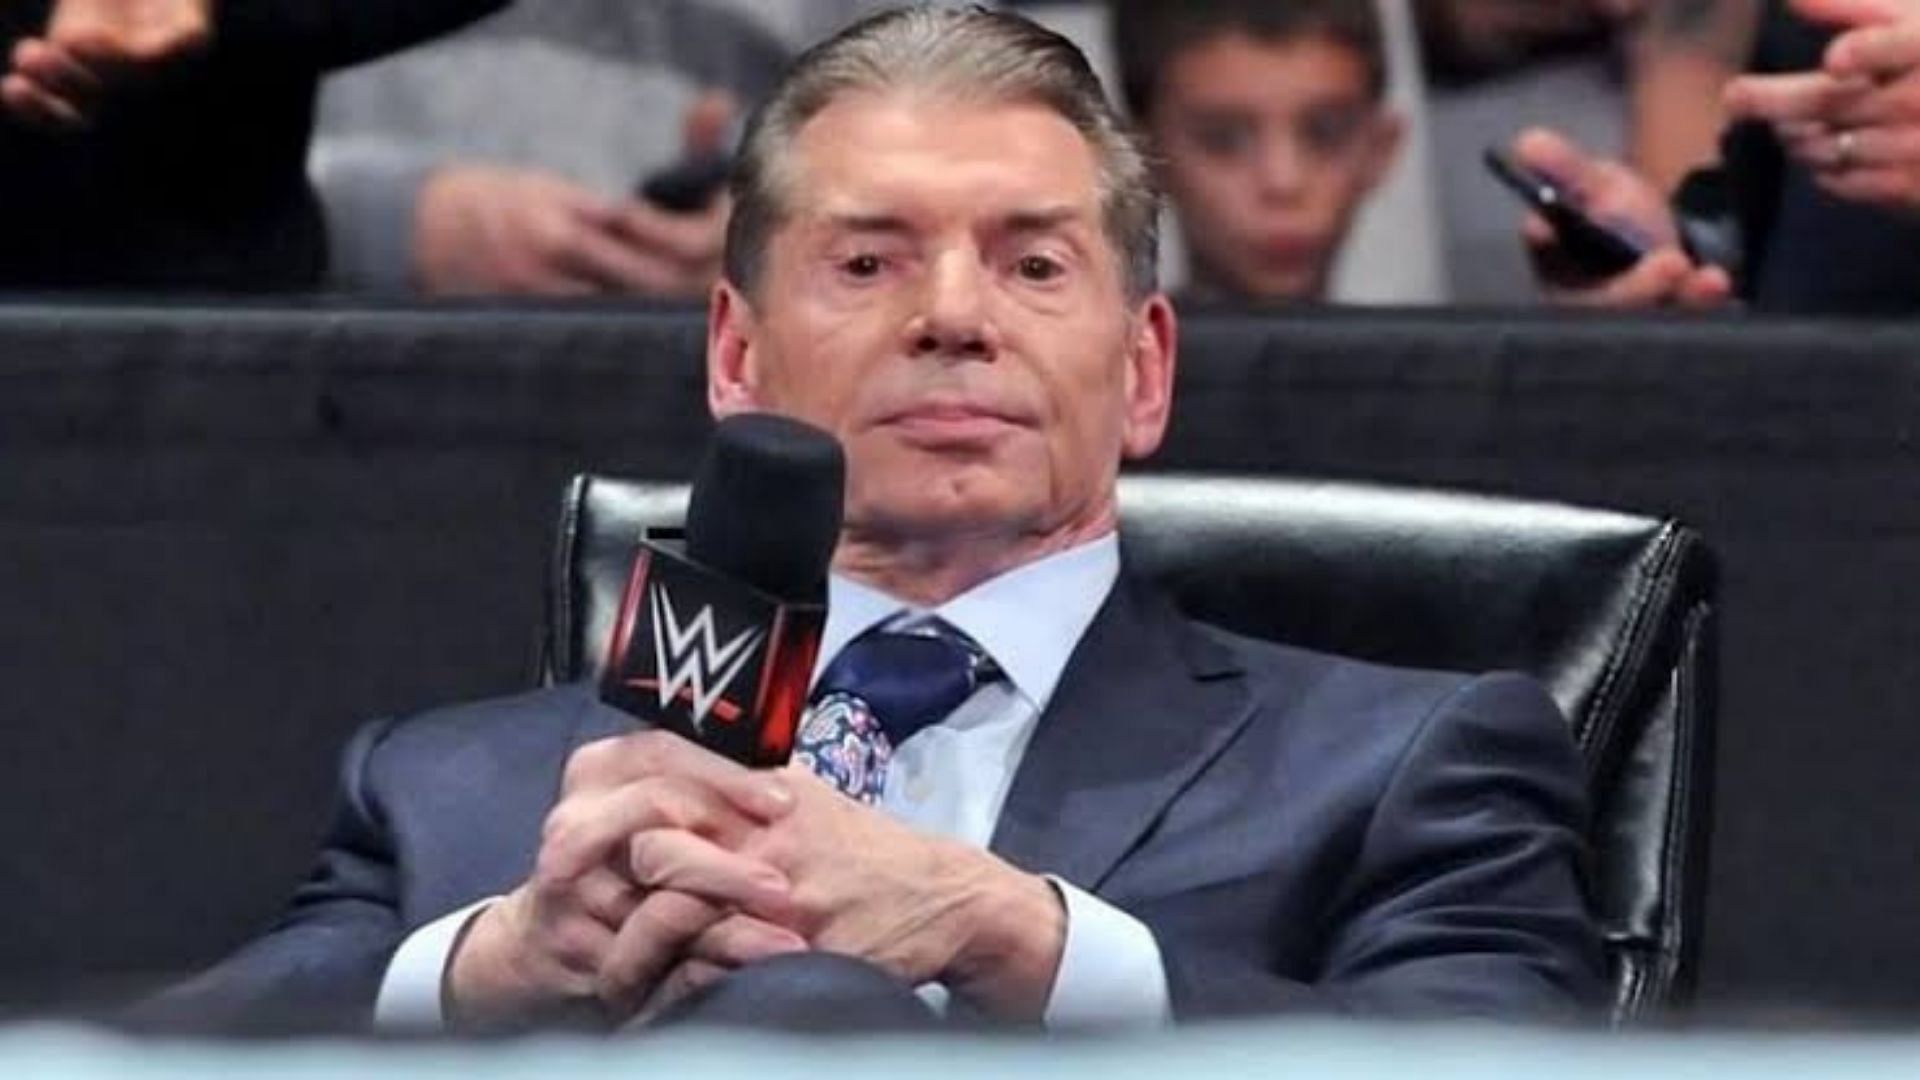 The WWE Chairman has praised Brock Lesnar